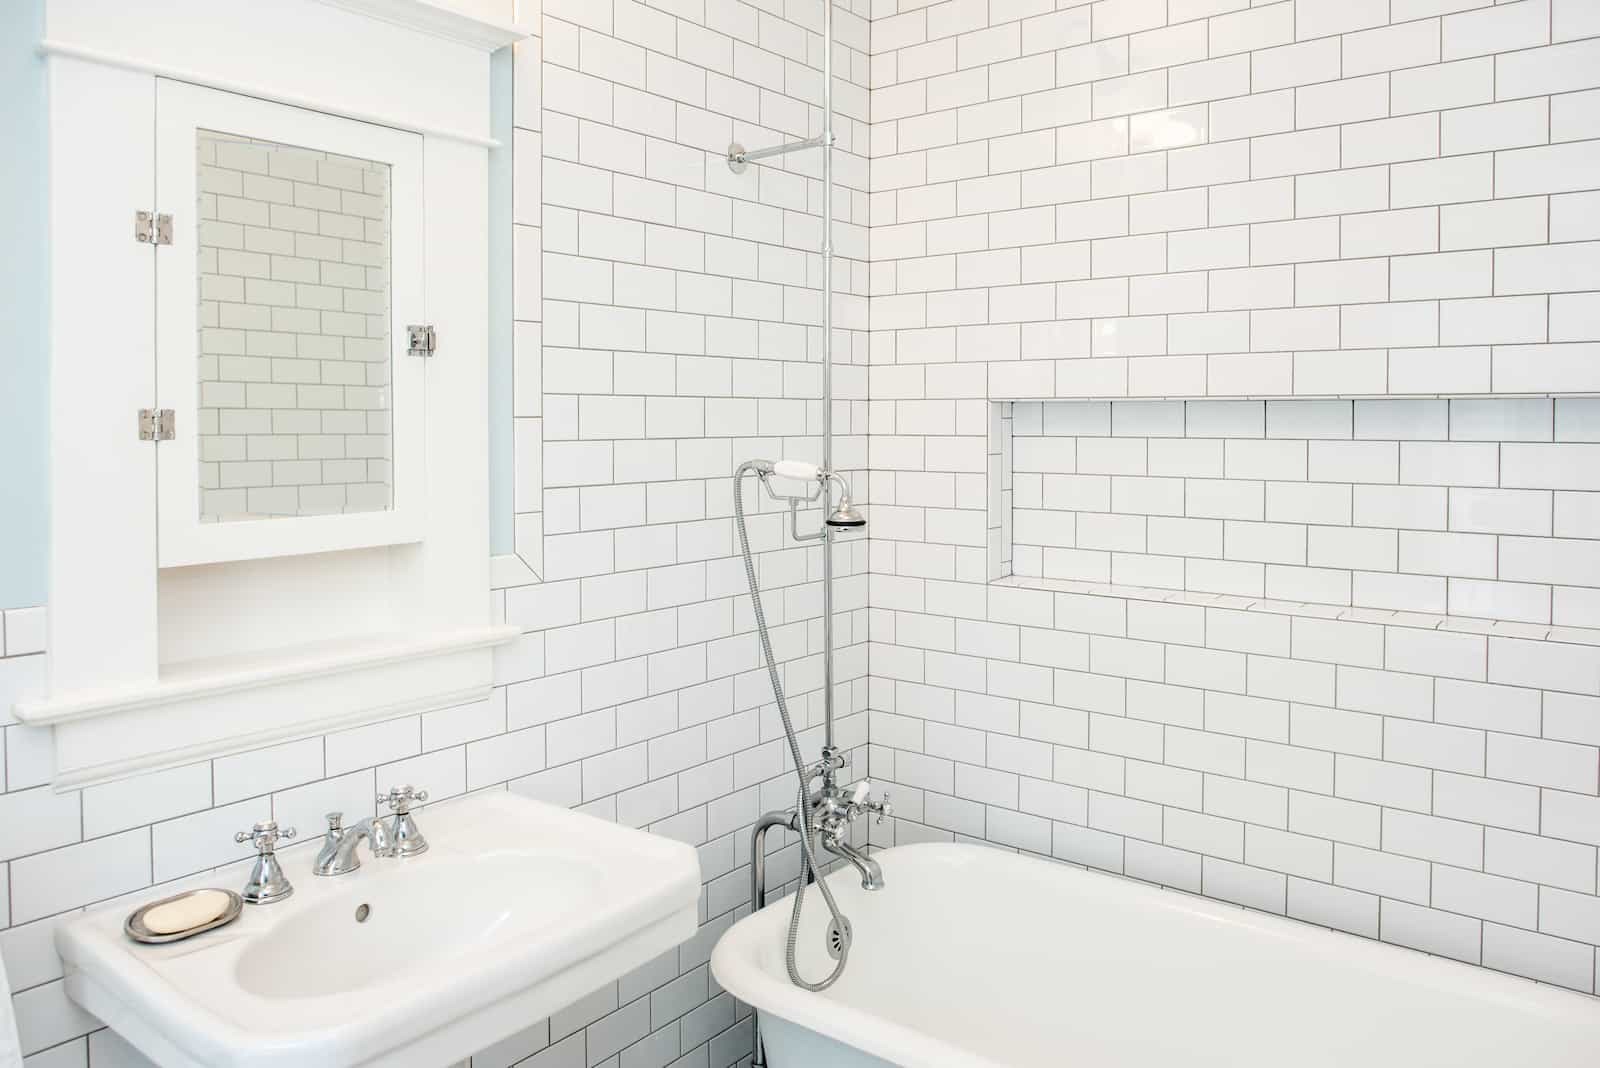 basic bathroom design